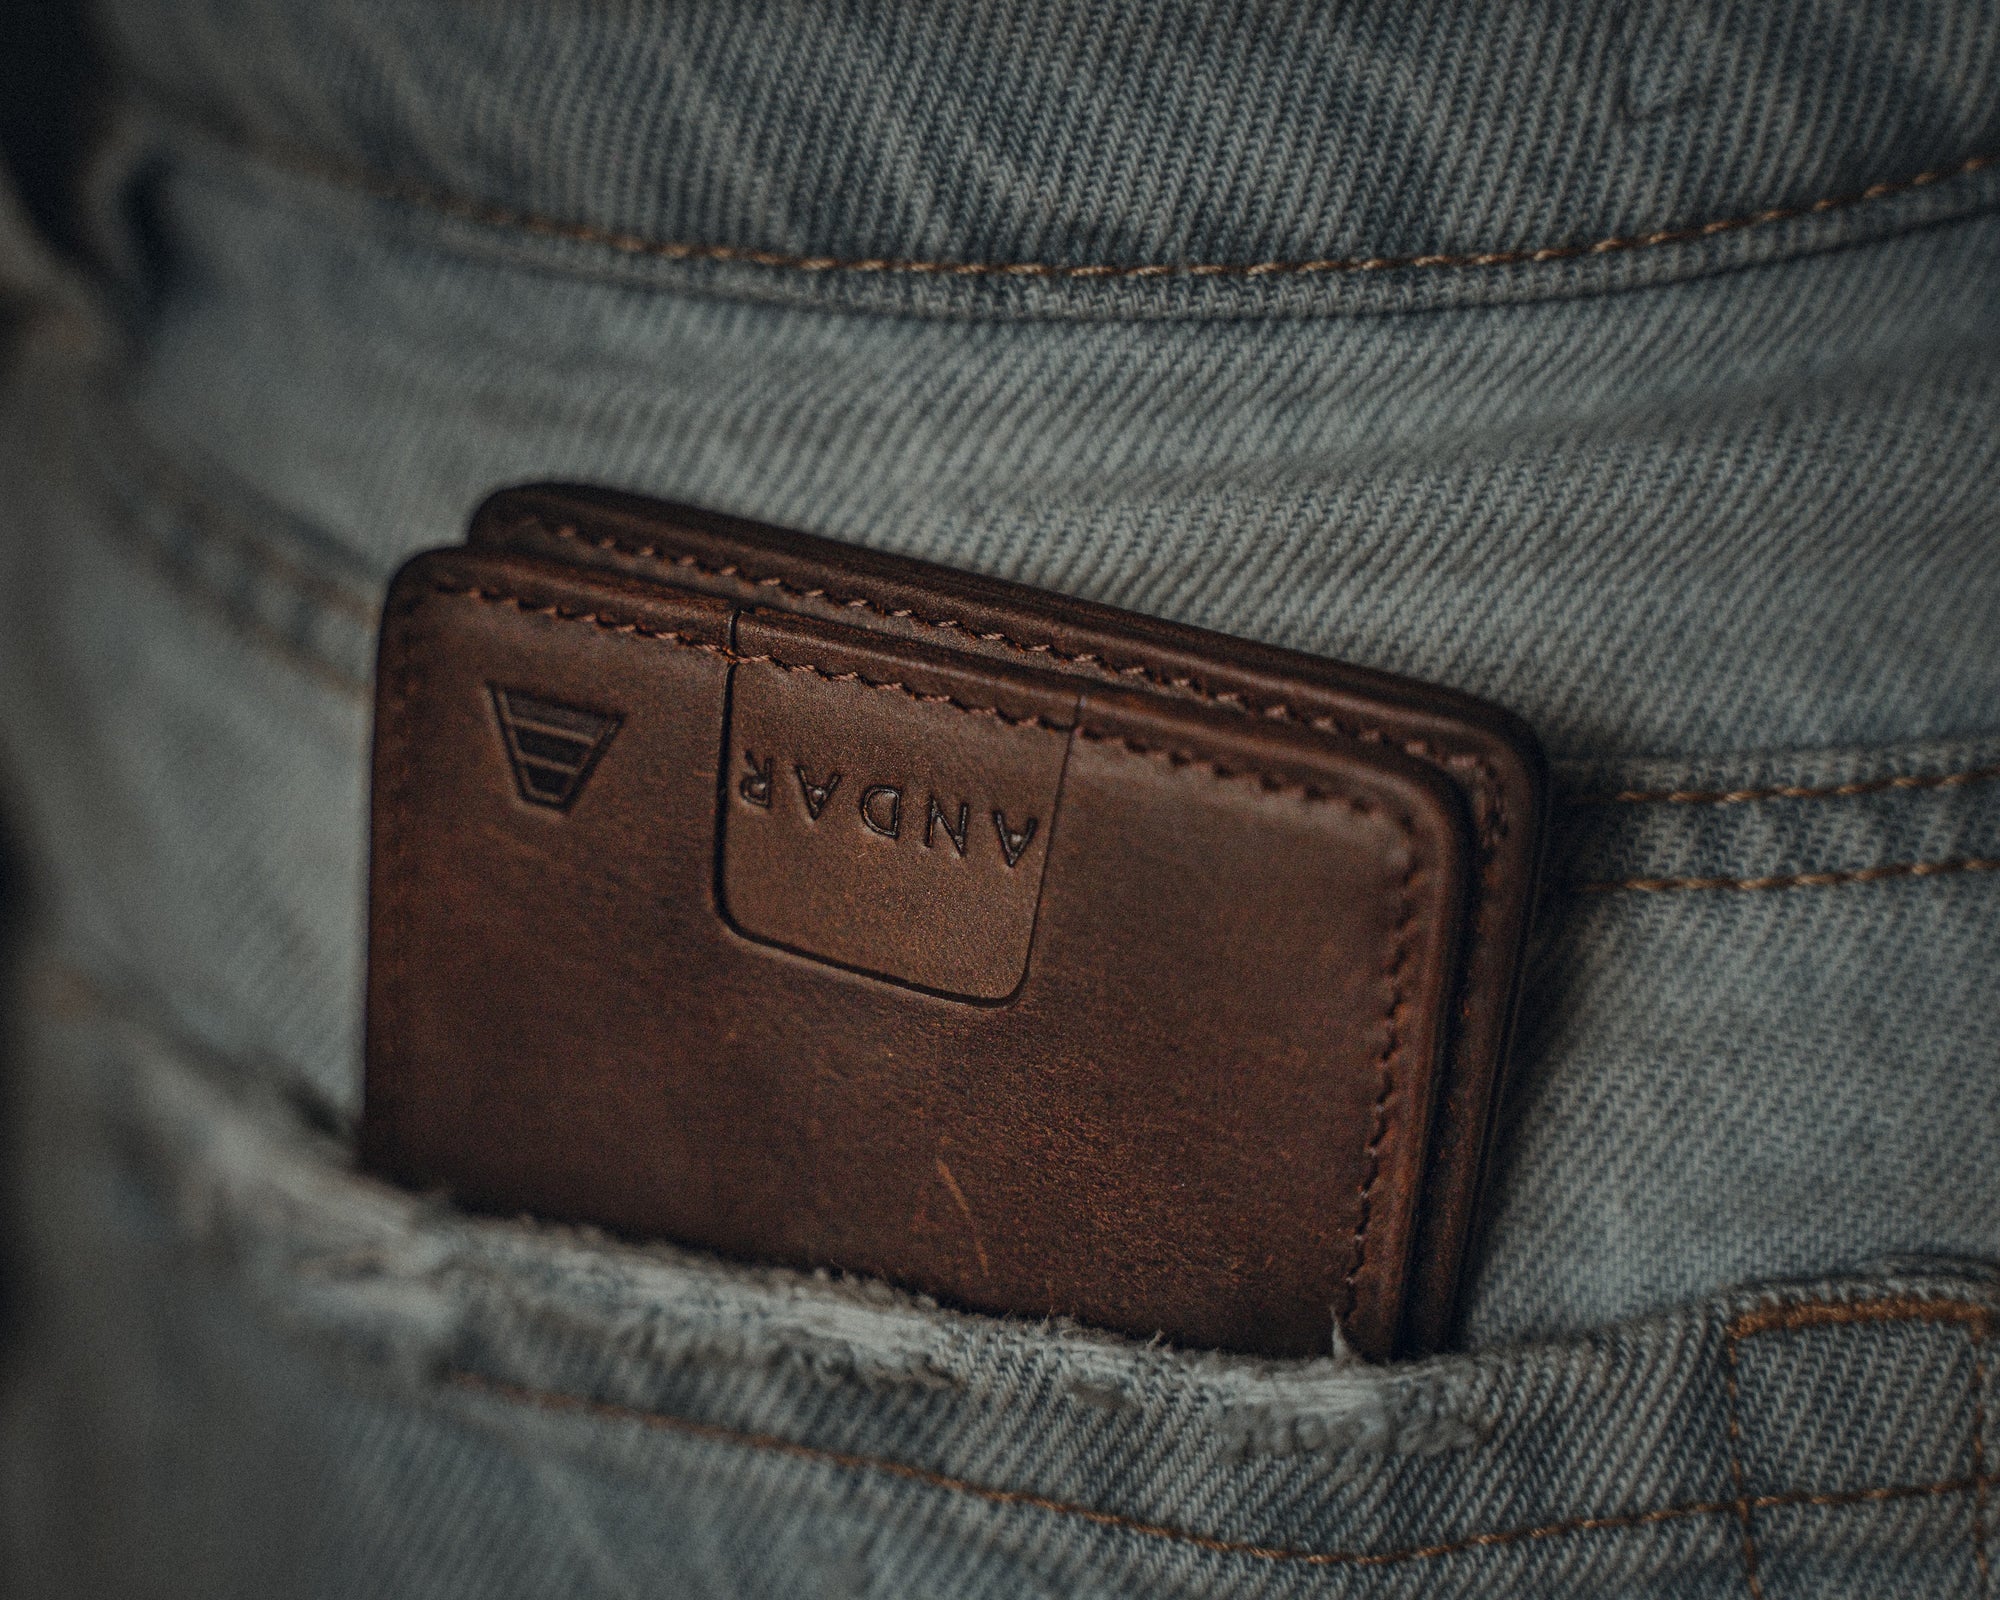 Our 5 Favorite Wallet Design Features